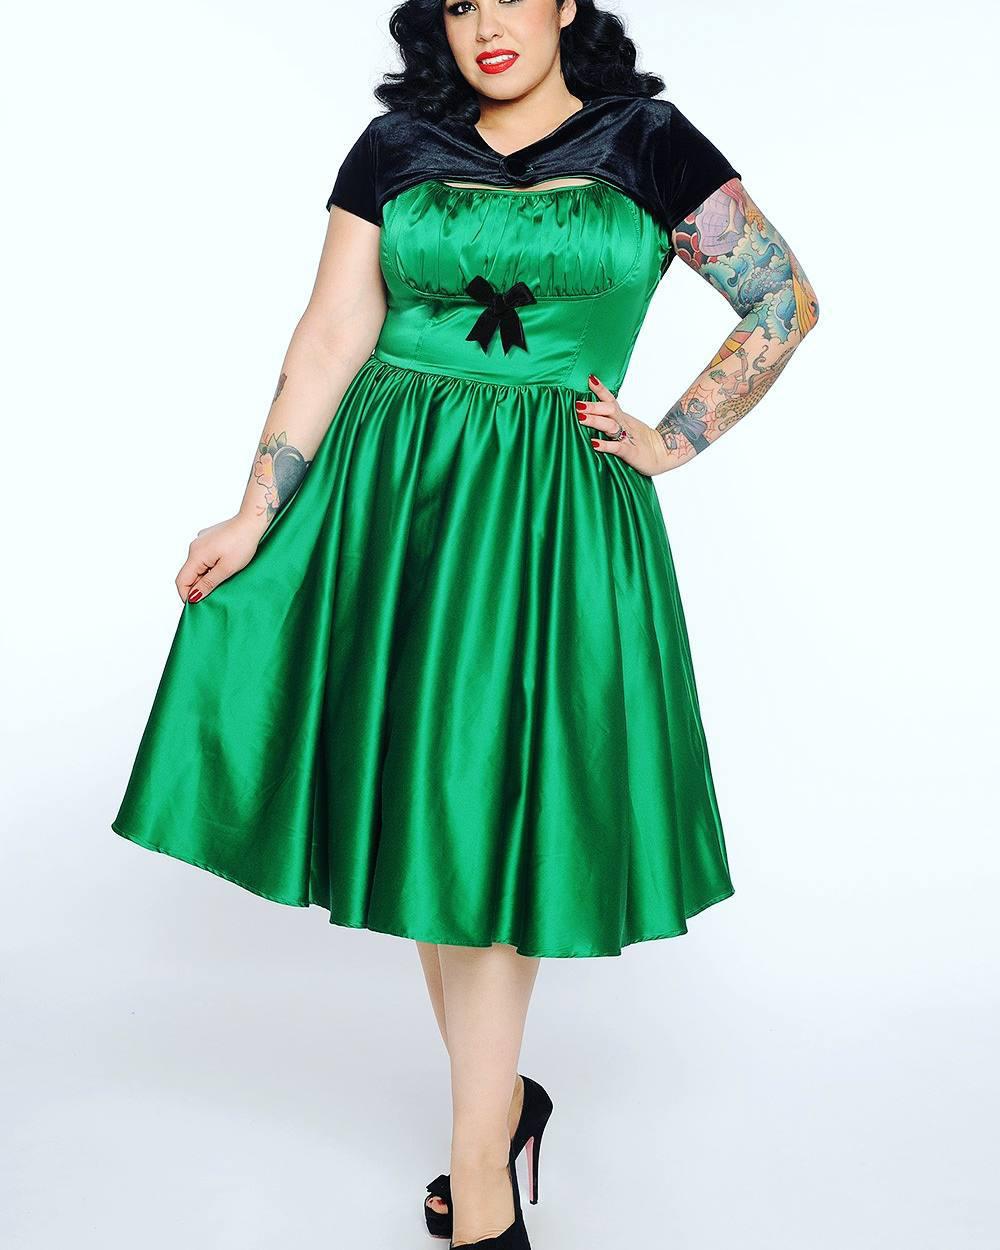 Ropa vintage, modelo de talla grande - moda, vestido, ropa, modelo: traje de talla grande,  Vestido verde  